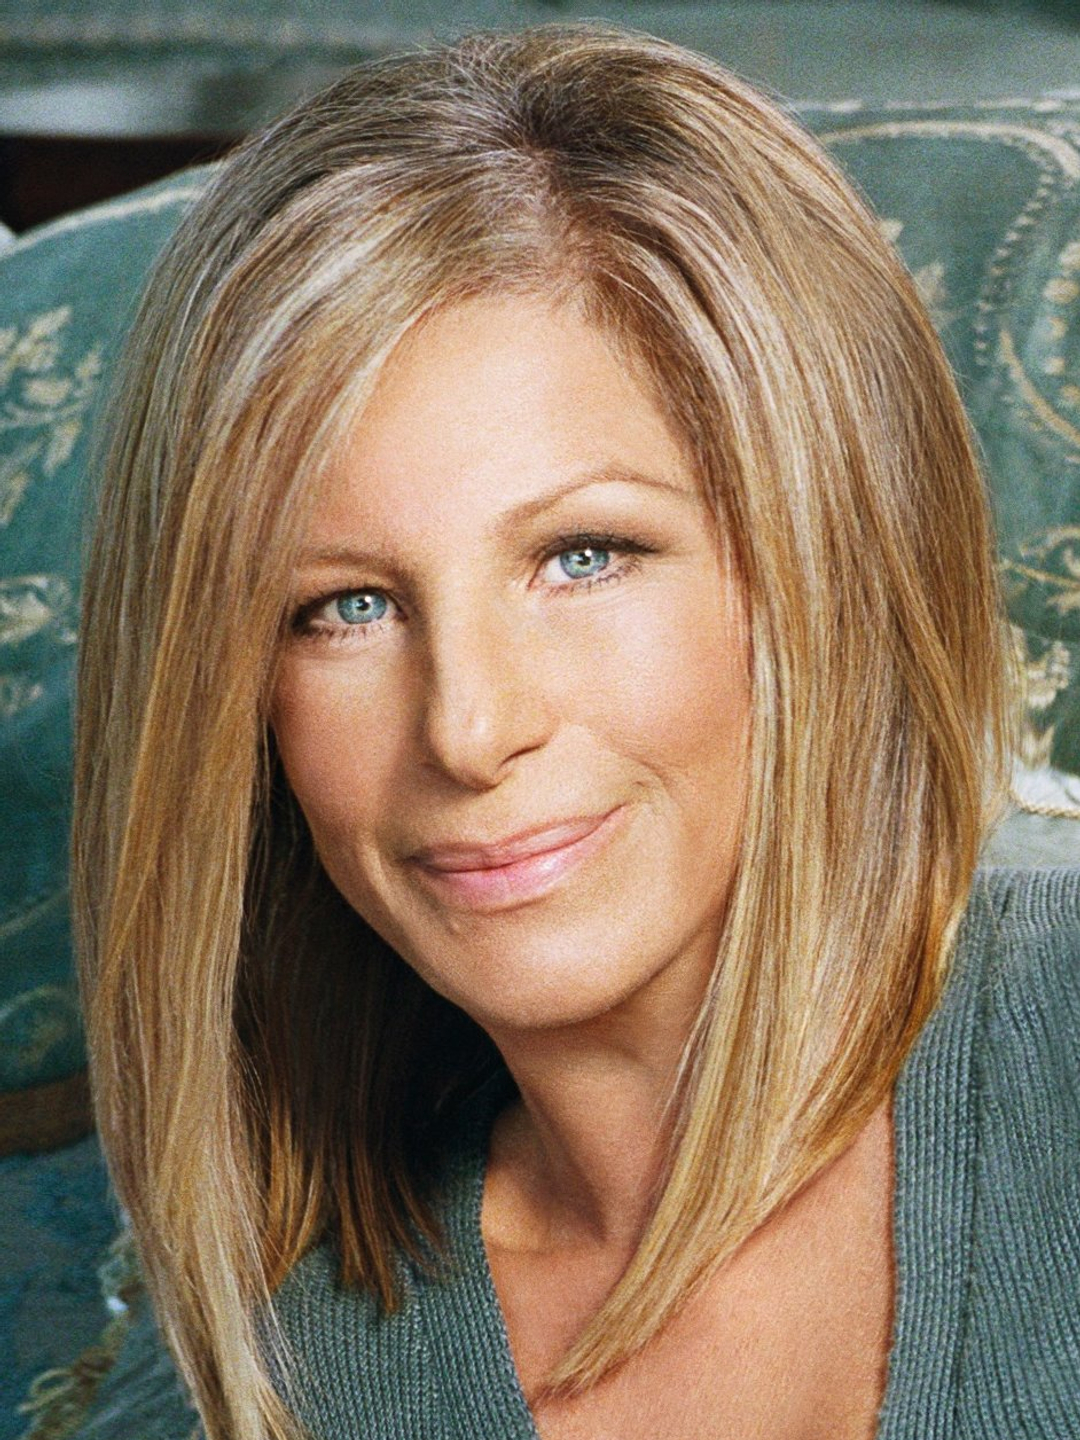 Barbra Streisand in her teens